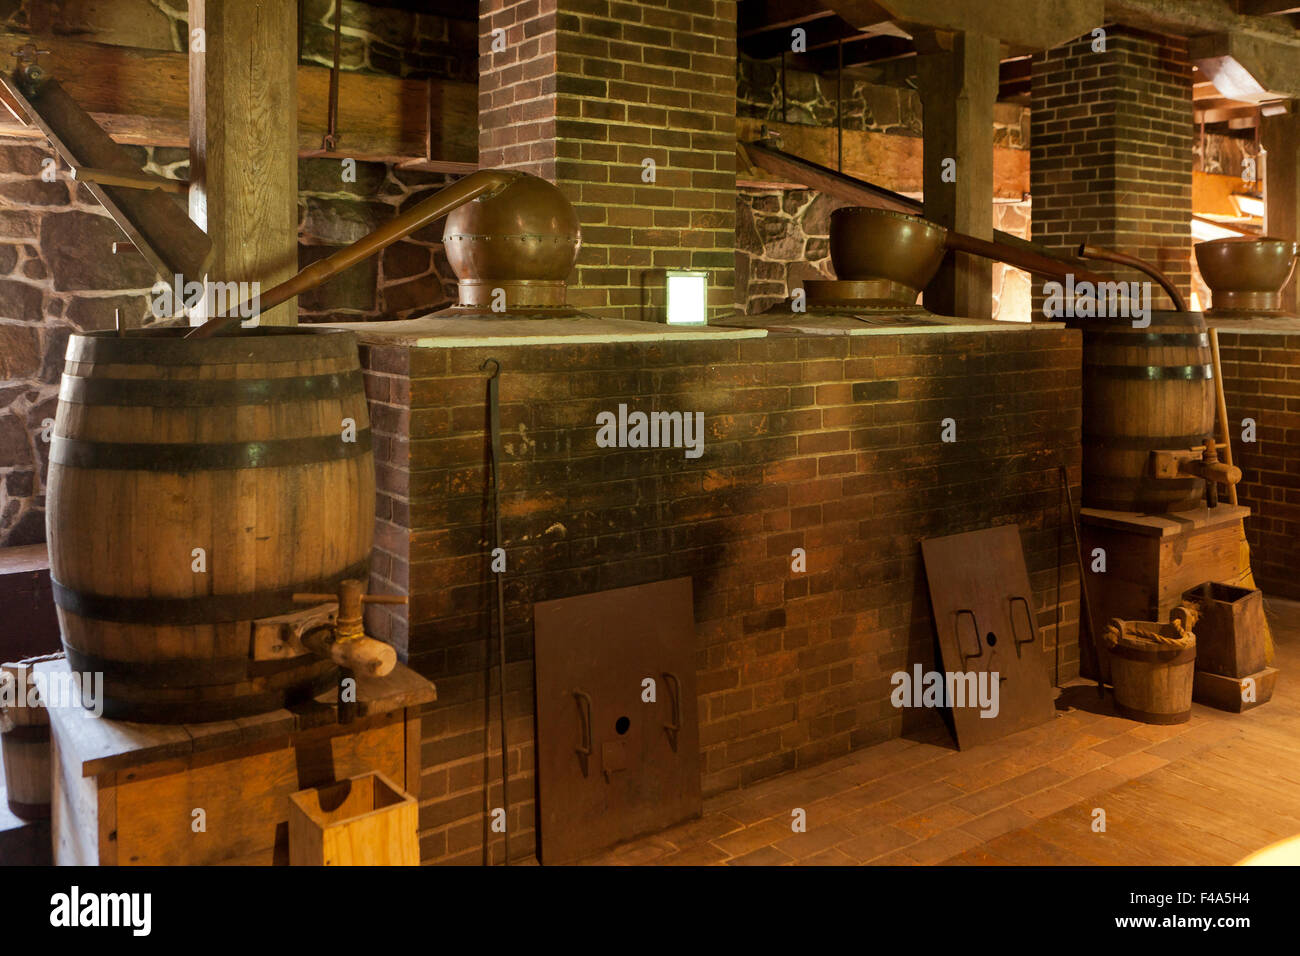 George Washington's Distillery interior - Alexandria, Virginia USA Stock Photo